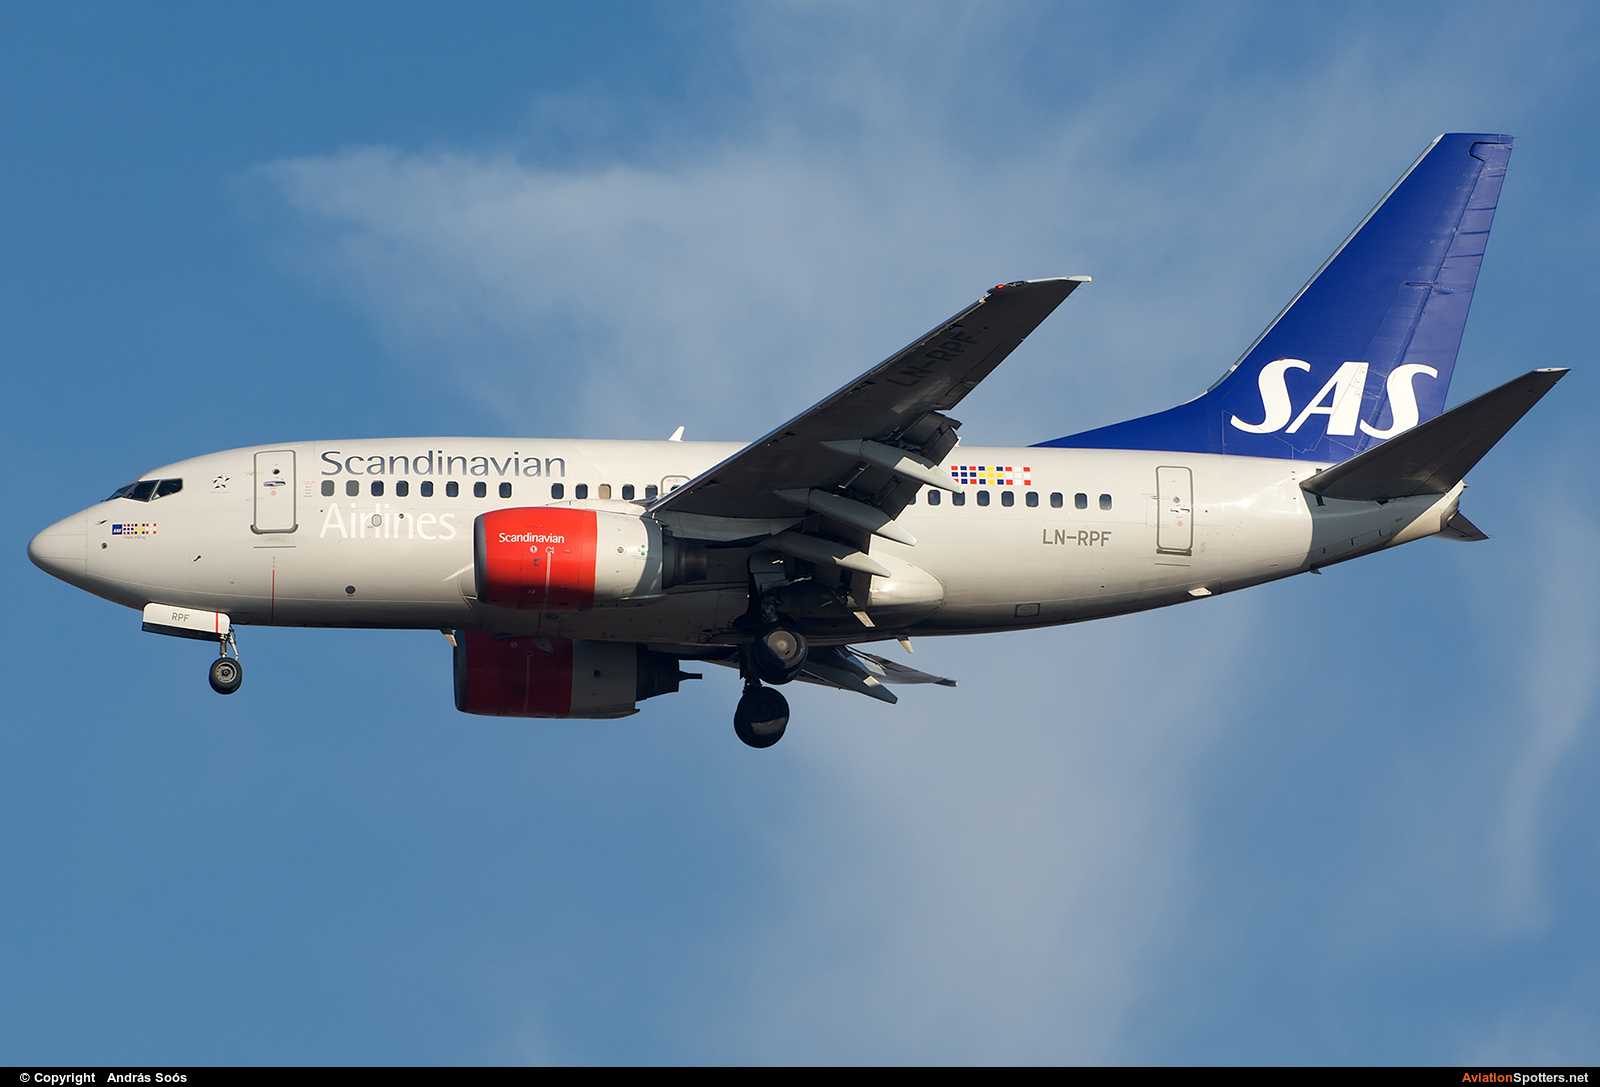 SAS - Scandinavian Airlines  -  737-600  (LN-RPF) By András Soós (sas1965)